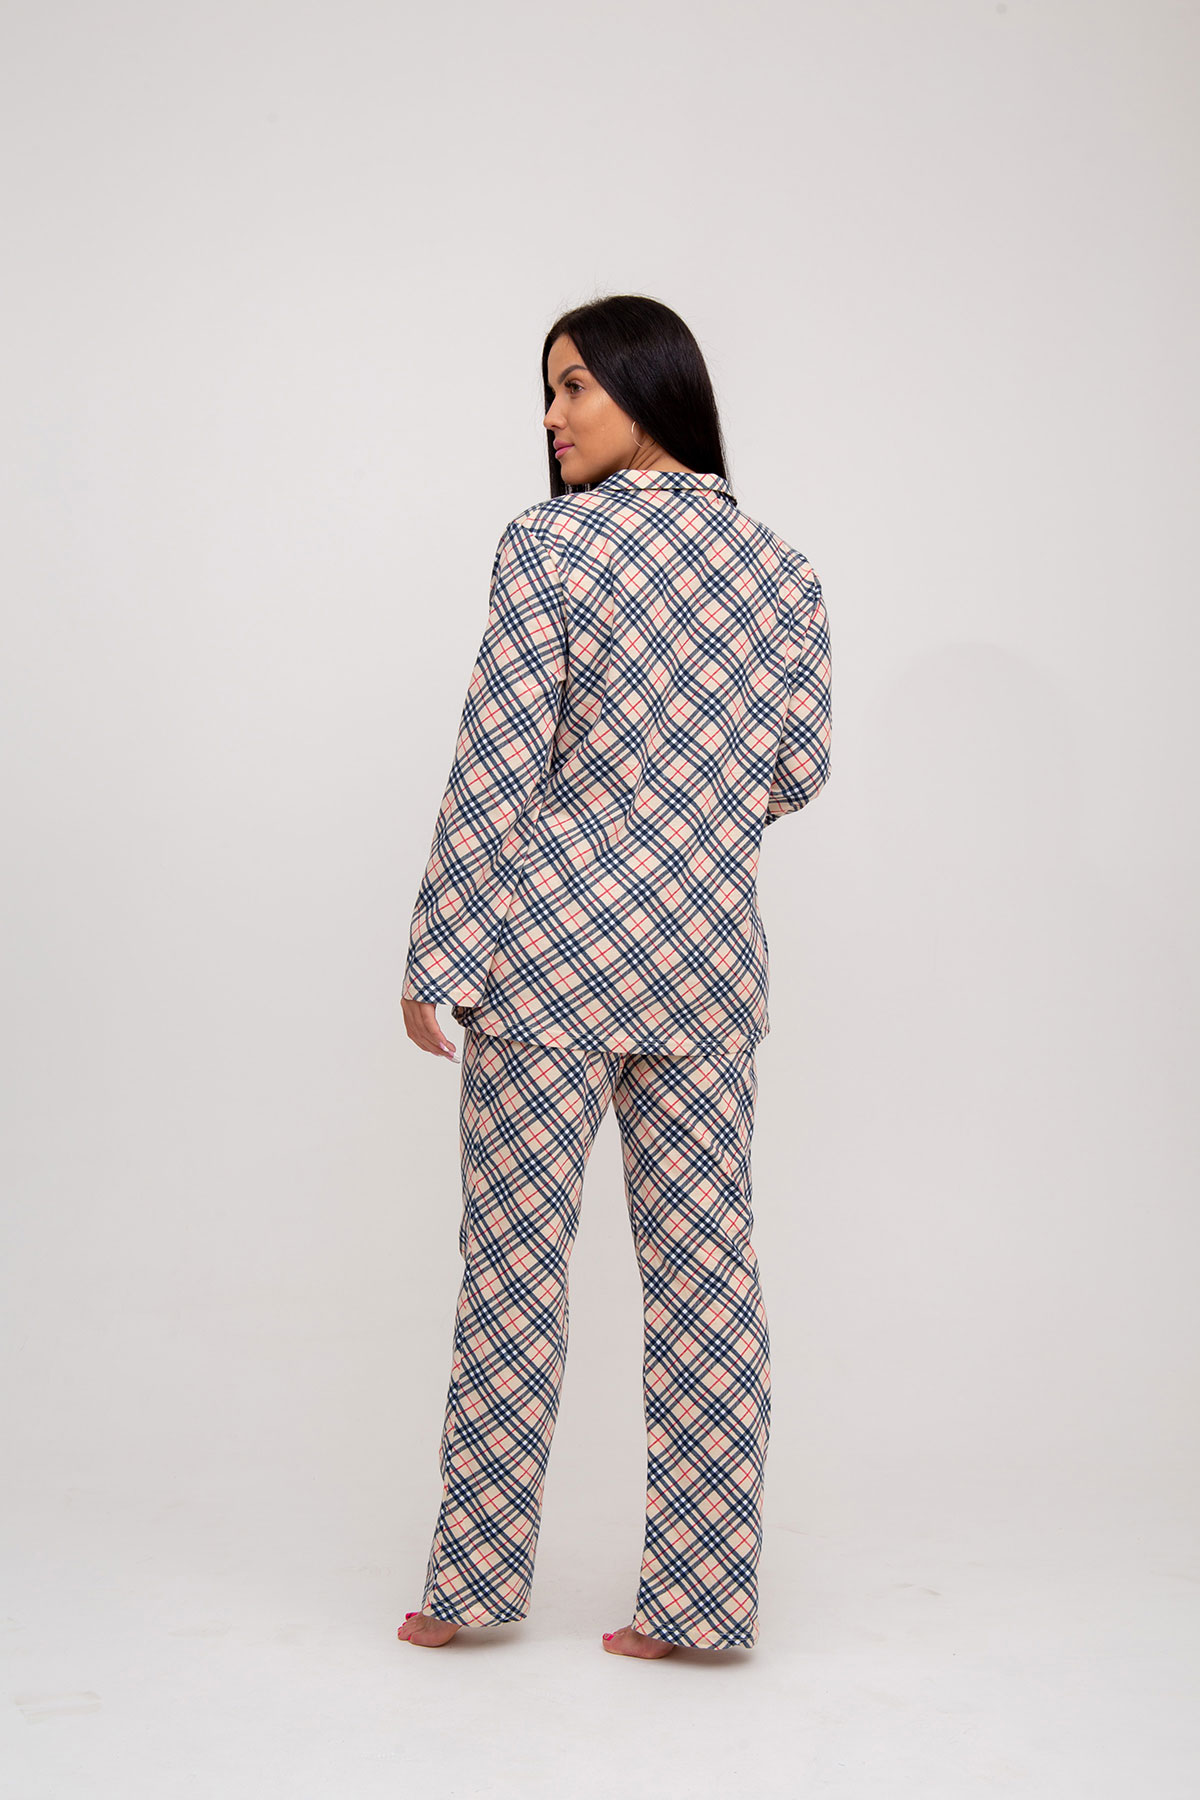 Жен. пижама с брюками арт. 23-0097 Бежевый р. 46 Моделлини, размер 46 - фото 2